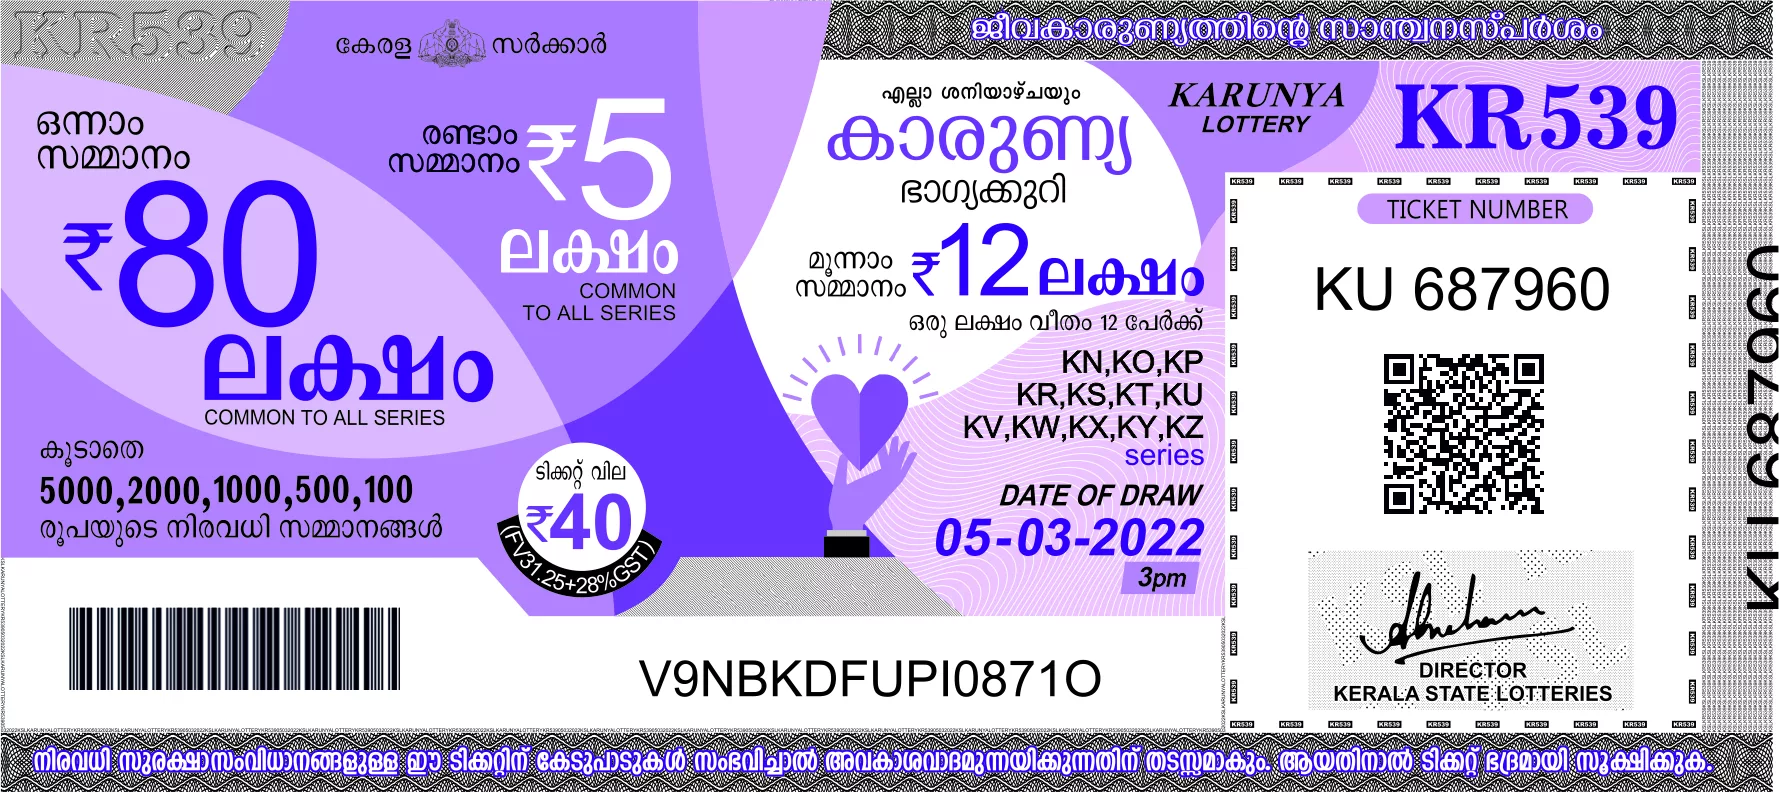 Today Karunya Lottery Result KR 603